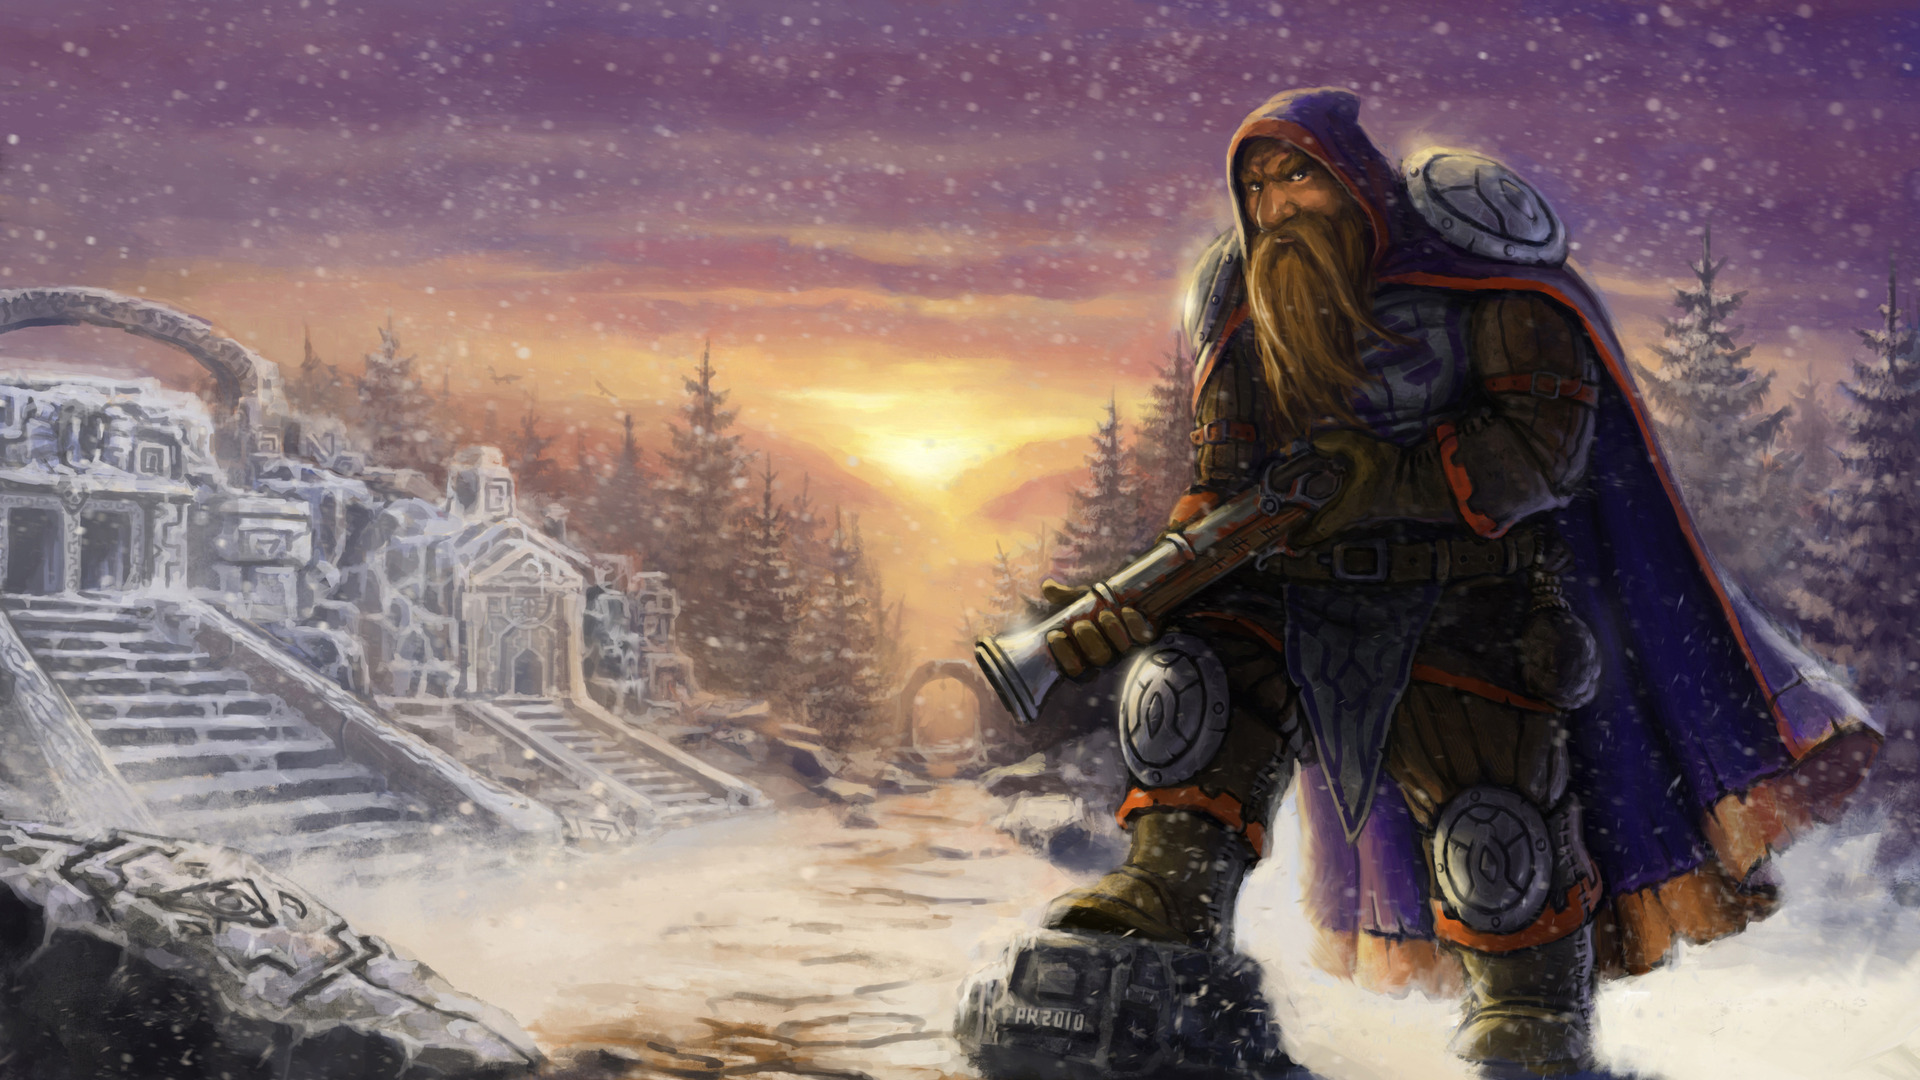 fantasy, dwarf lock screen backgrounds